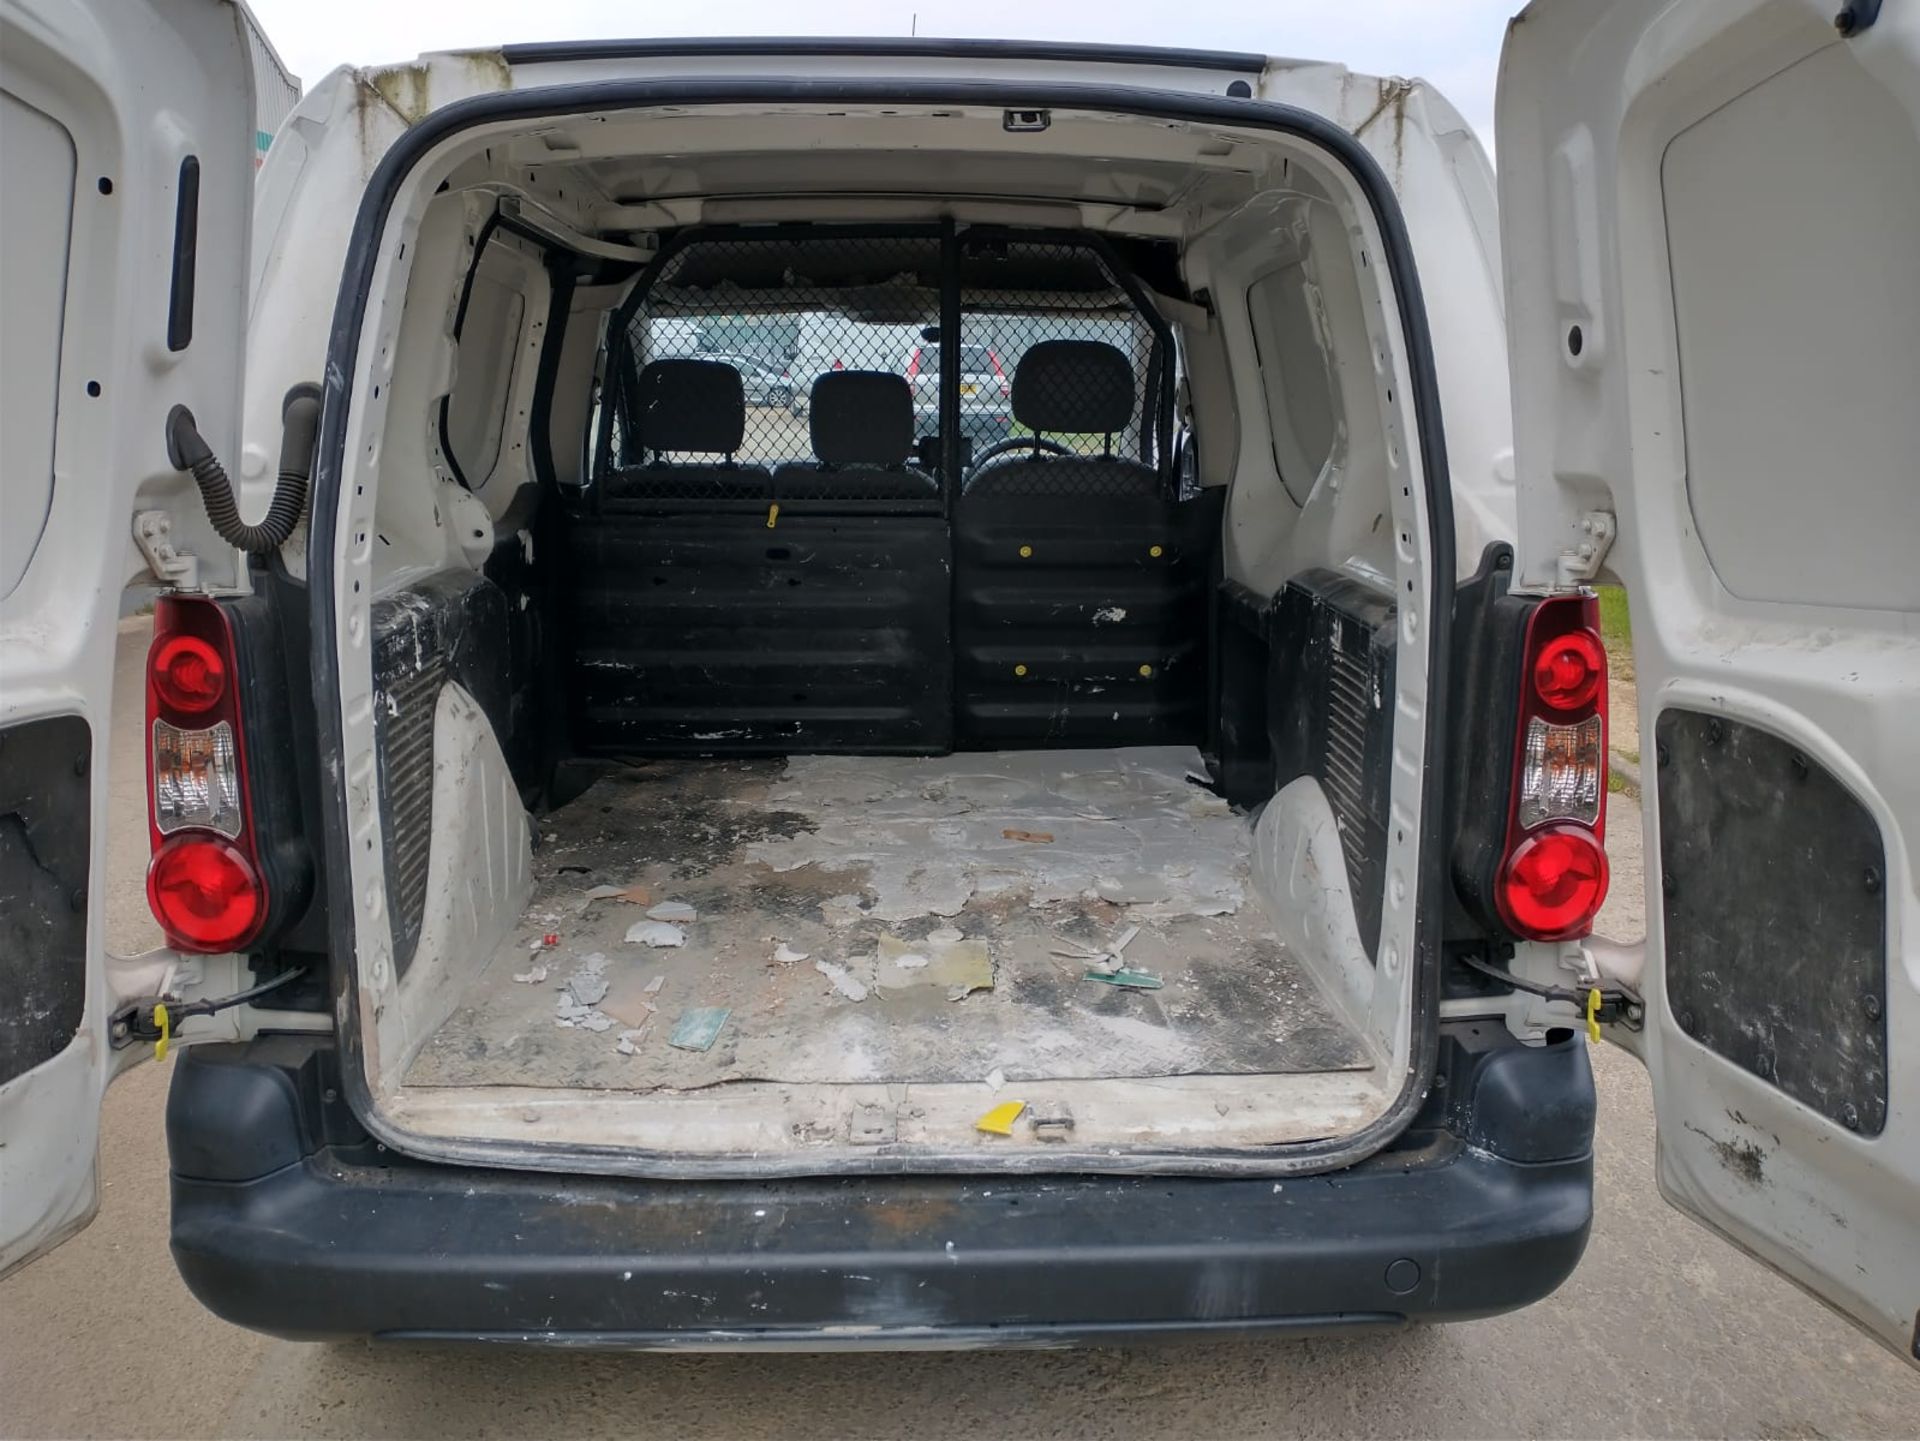 2015 Peugeot Partner Panel Van - CL505 - Location: Corby - Image 13 of 15